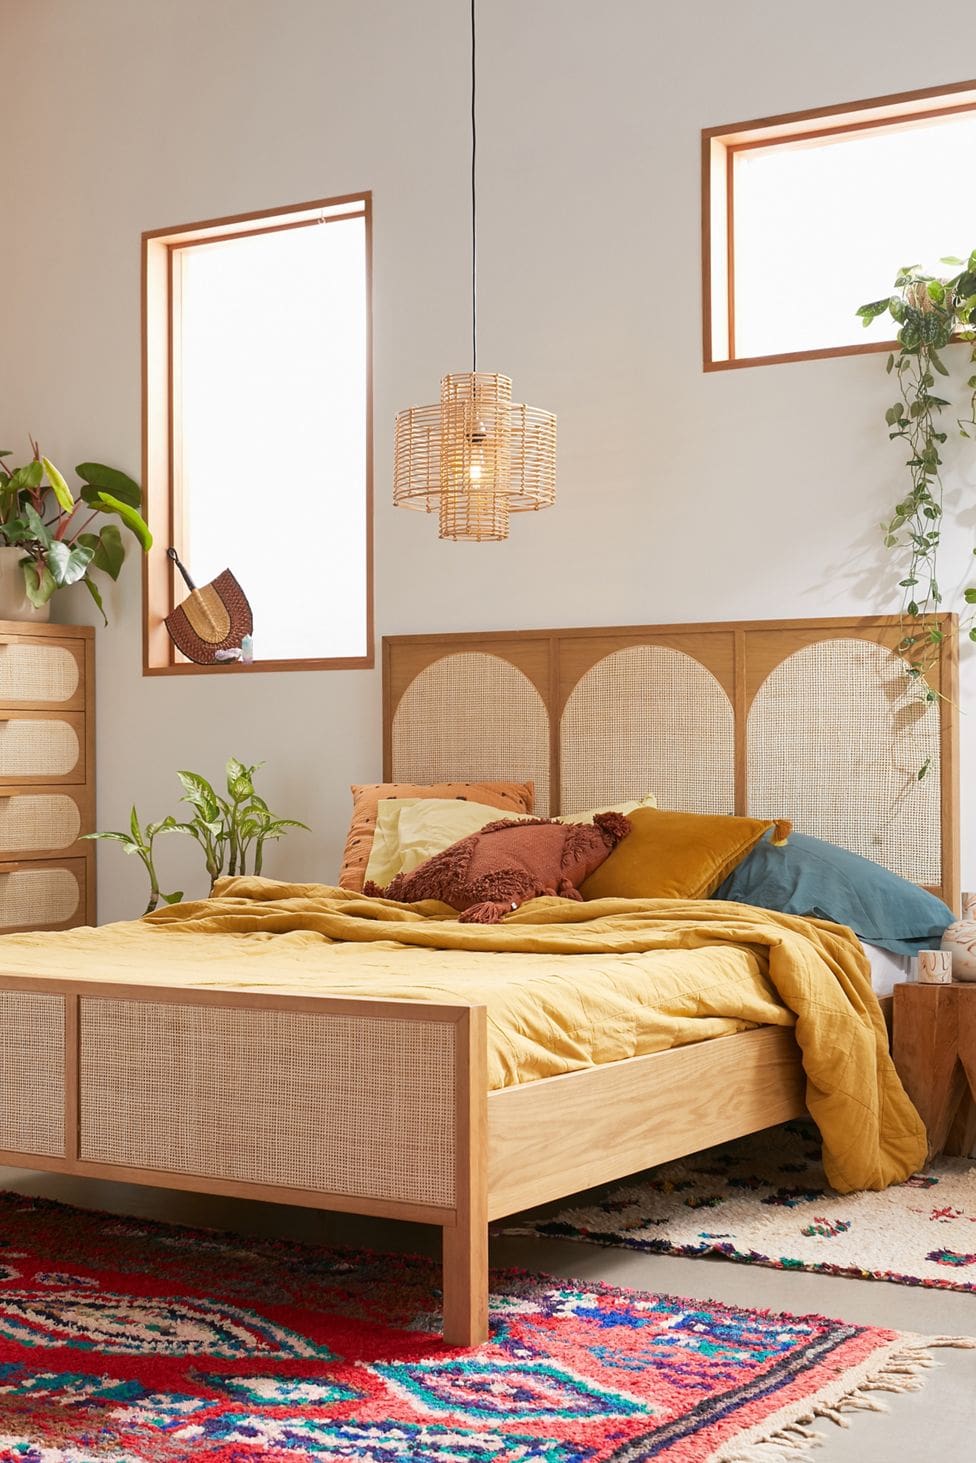 Go Retro with a Wood + Cane Bed Frame